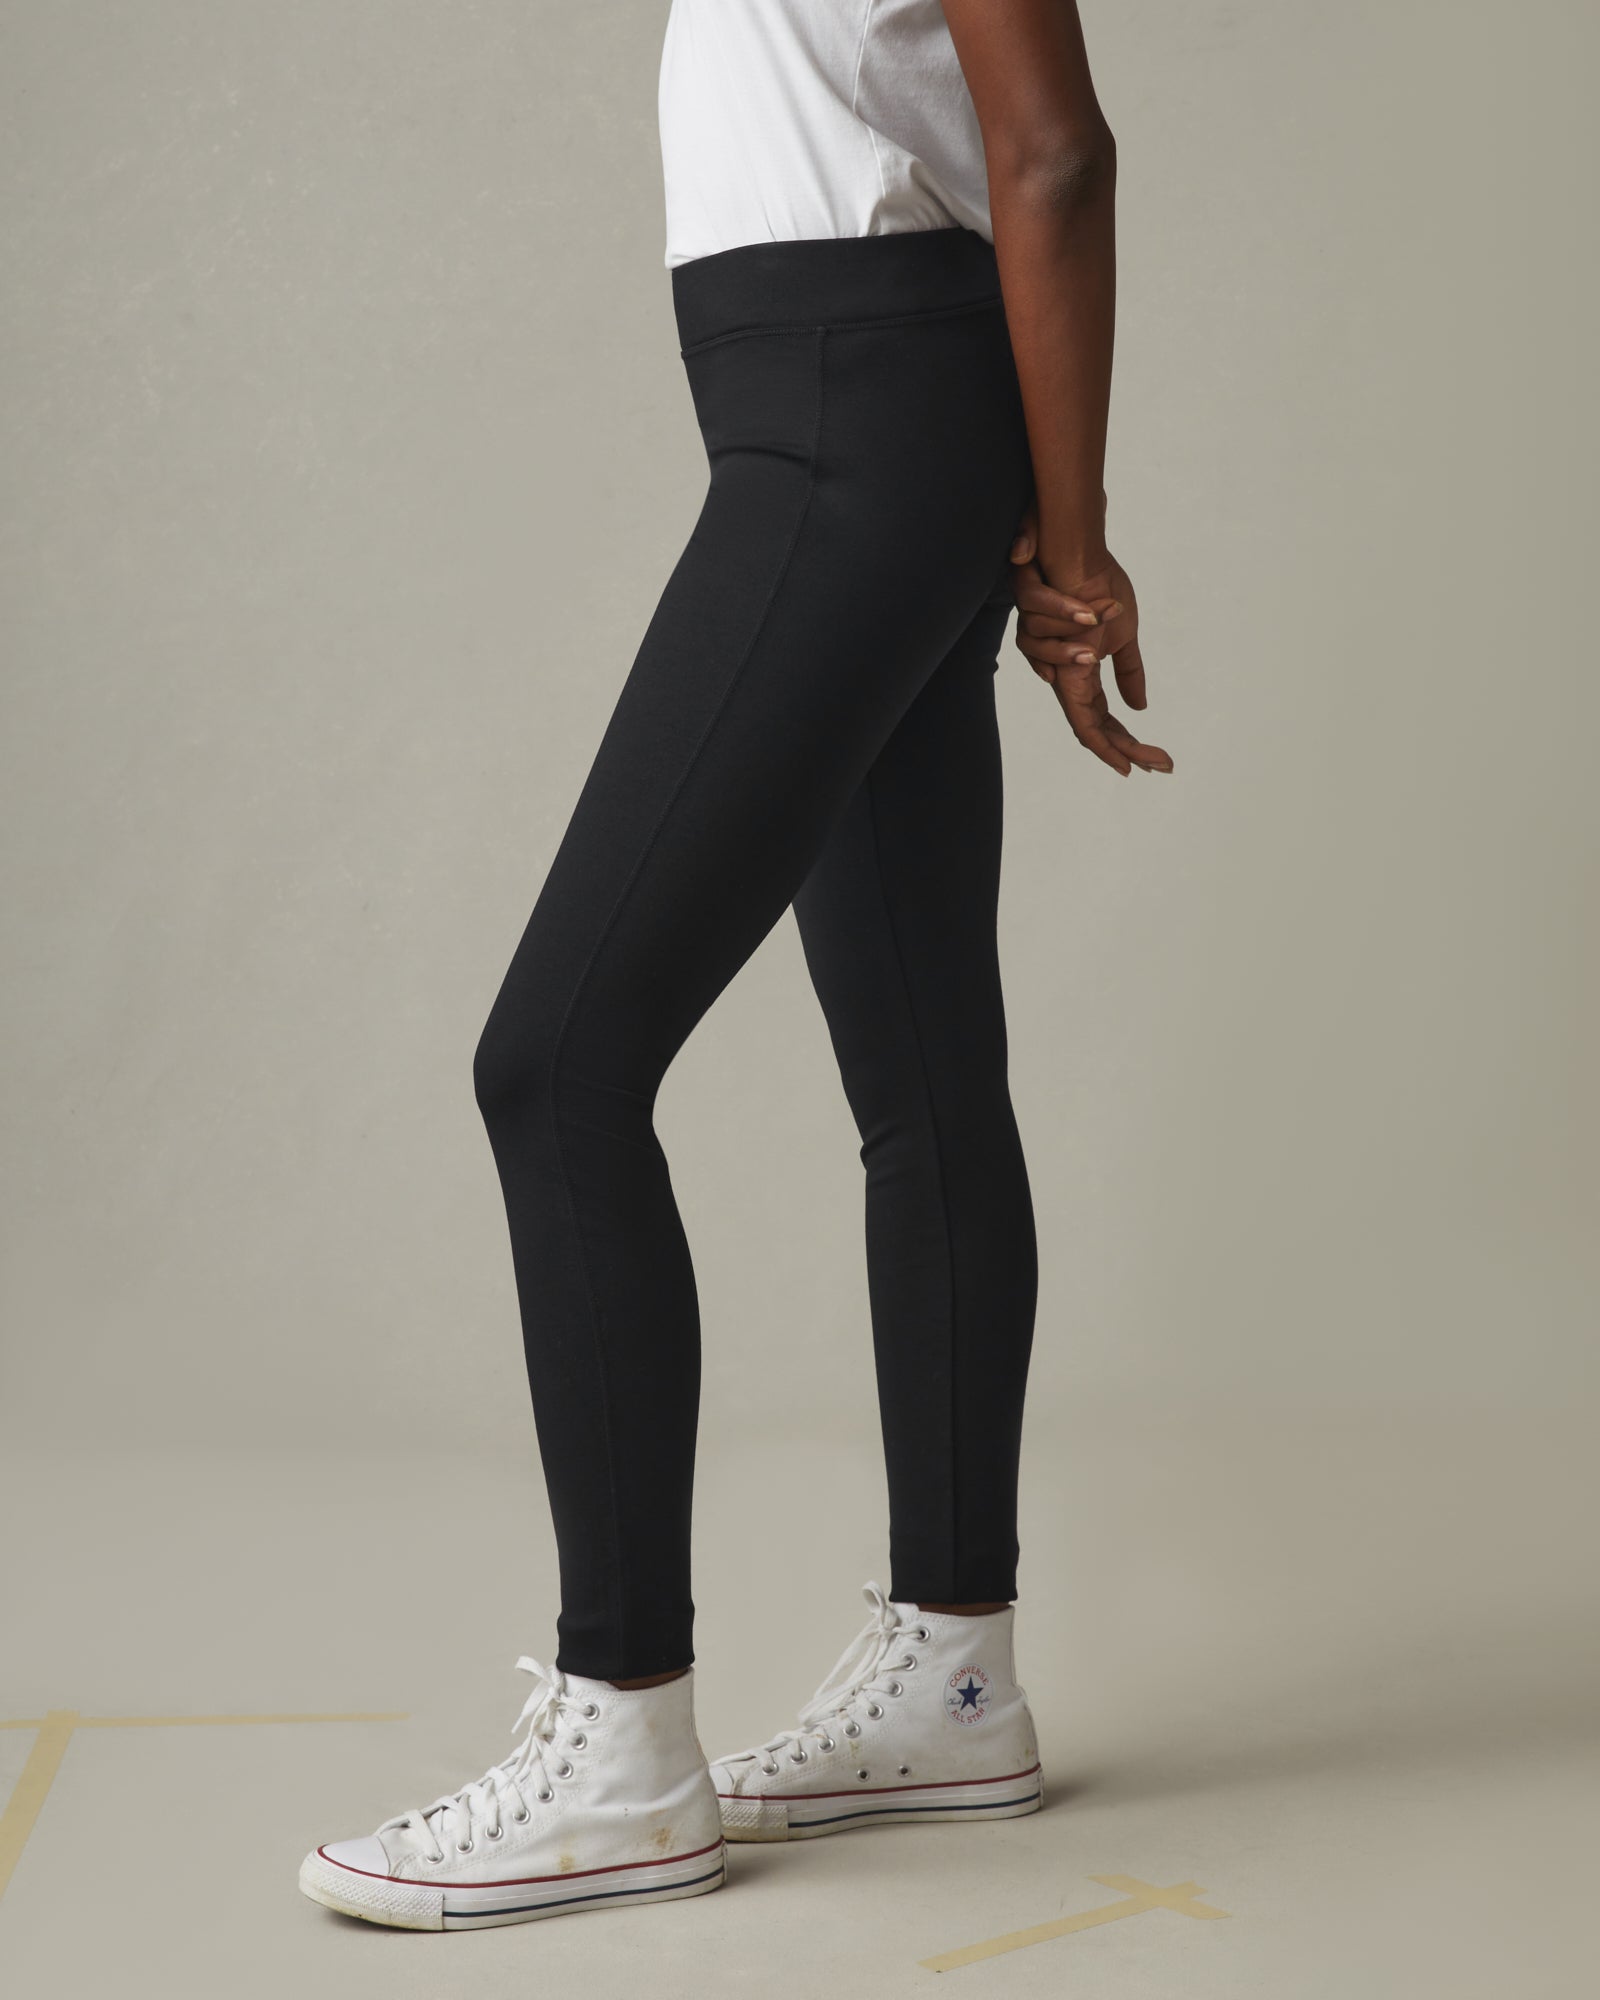 Buy Go Colors Women Solid Off White Ankle Length Leggings - Tall online